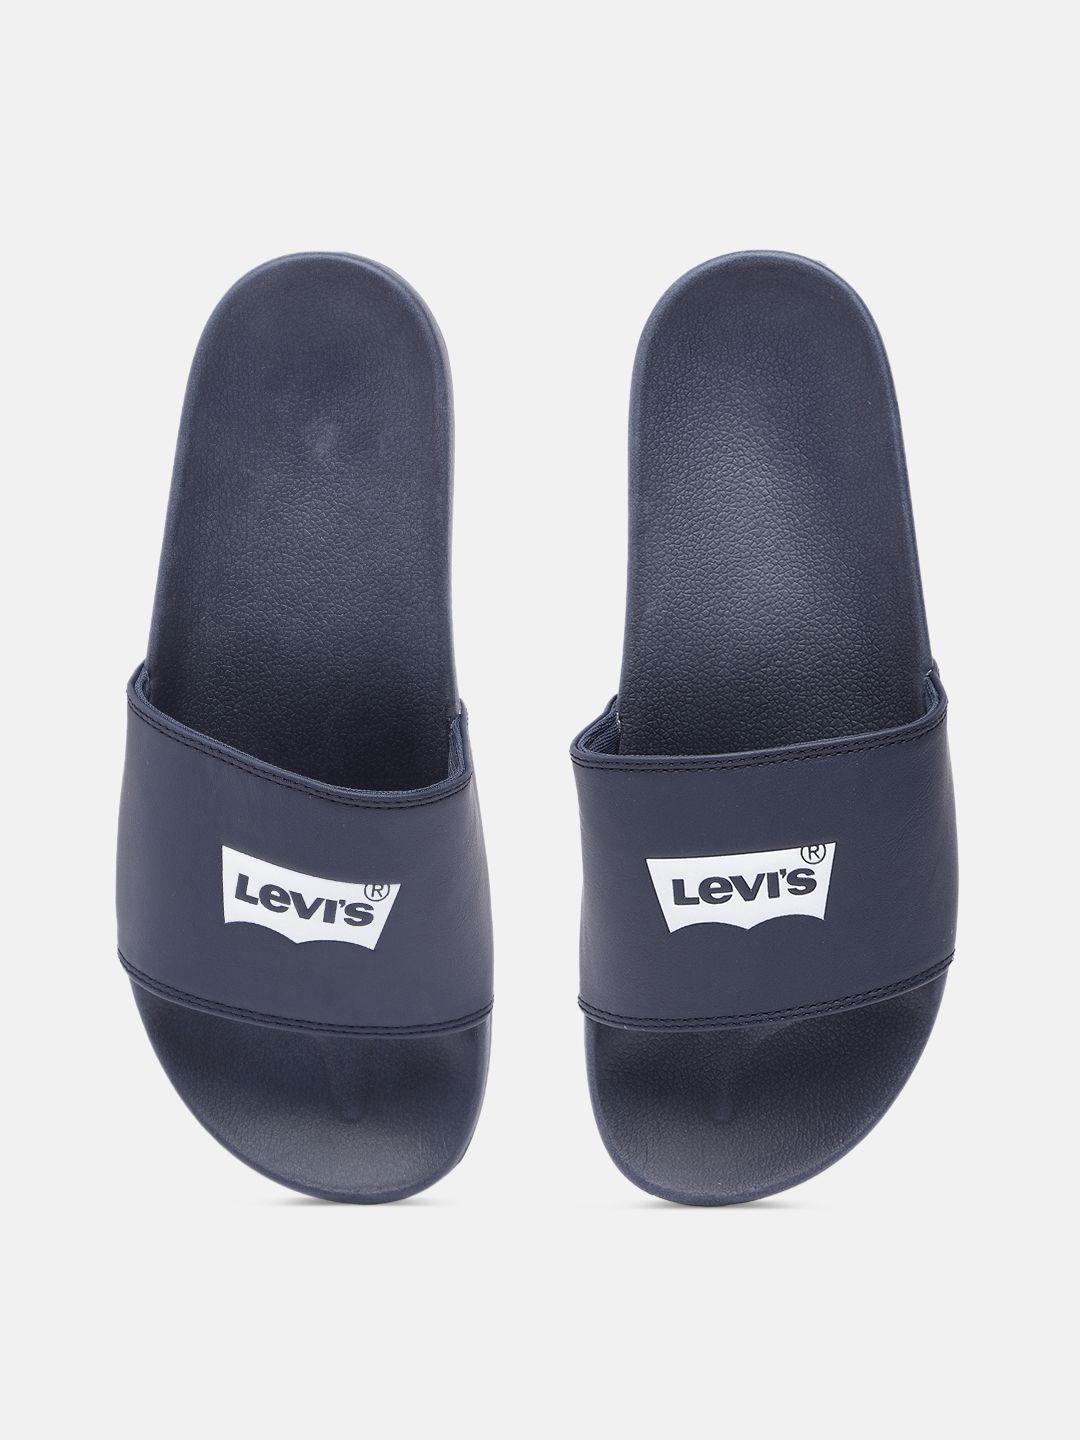 levis men navy blue june batwing brand logo printed sliders